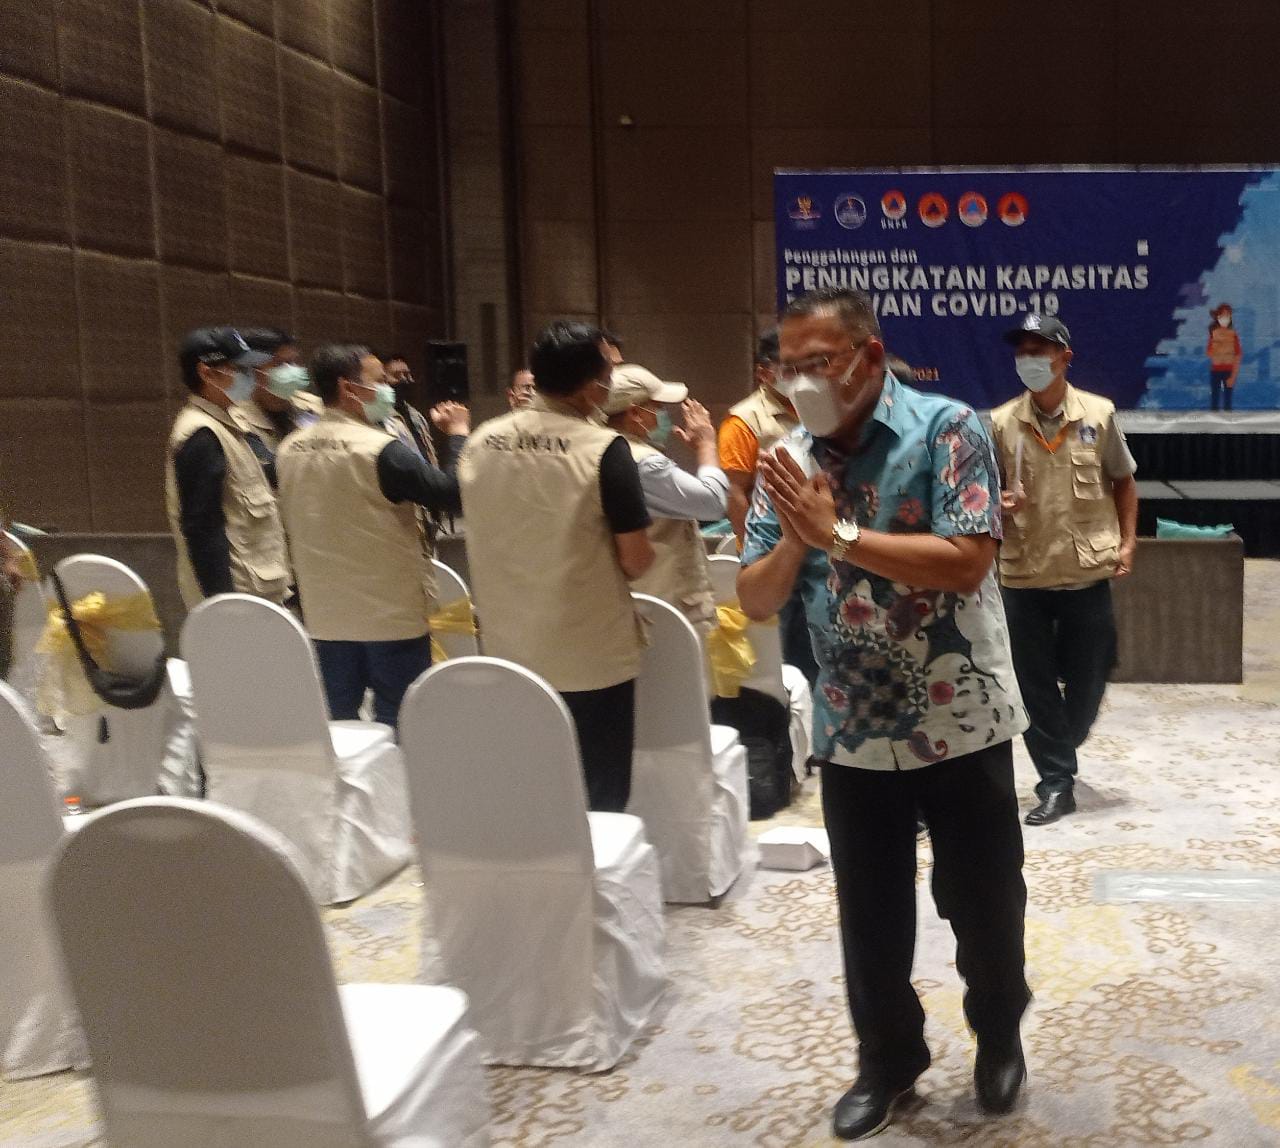 Peningkatan Kapasitas Satgas Relawan Covid-19 se-Tangerang Raya bersama BNPB